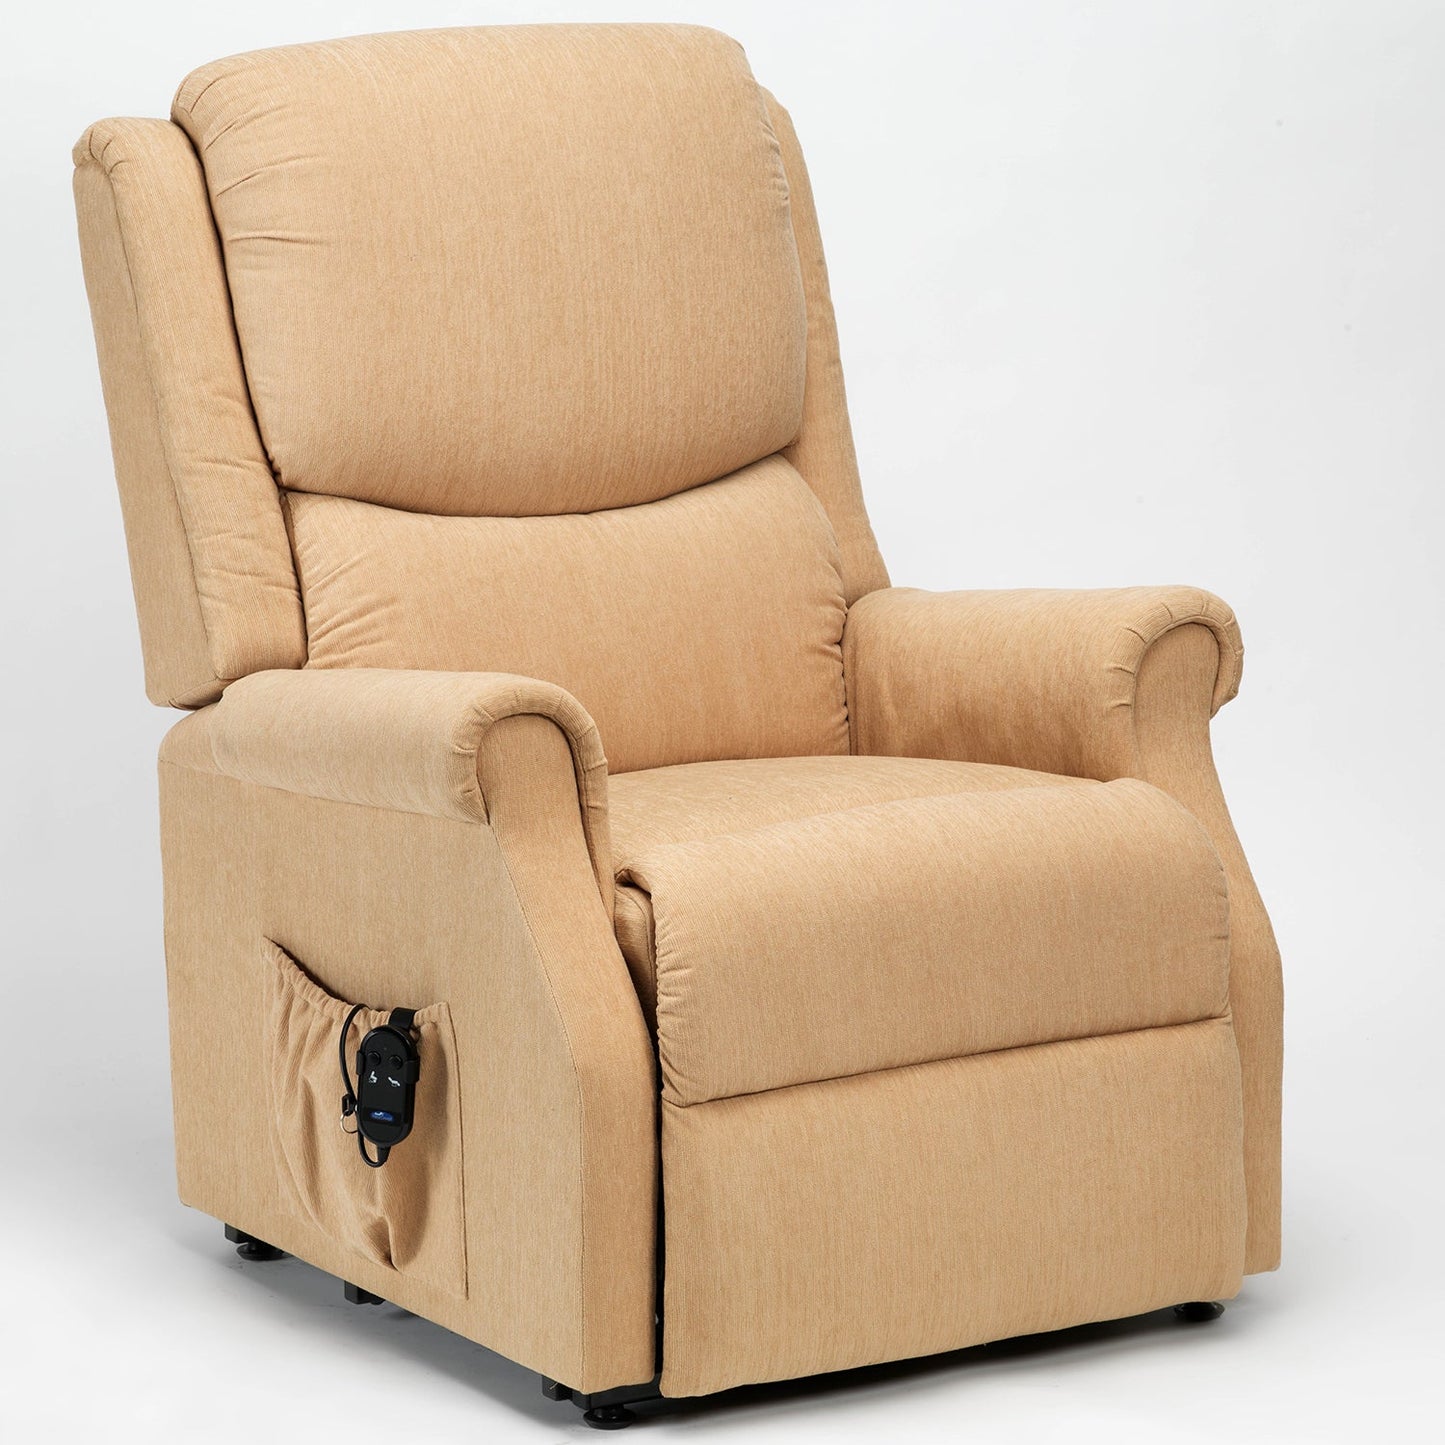 Indiana Single Motor Standard & Petite Riser Recliner Chair